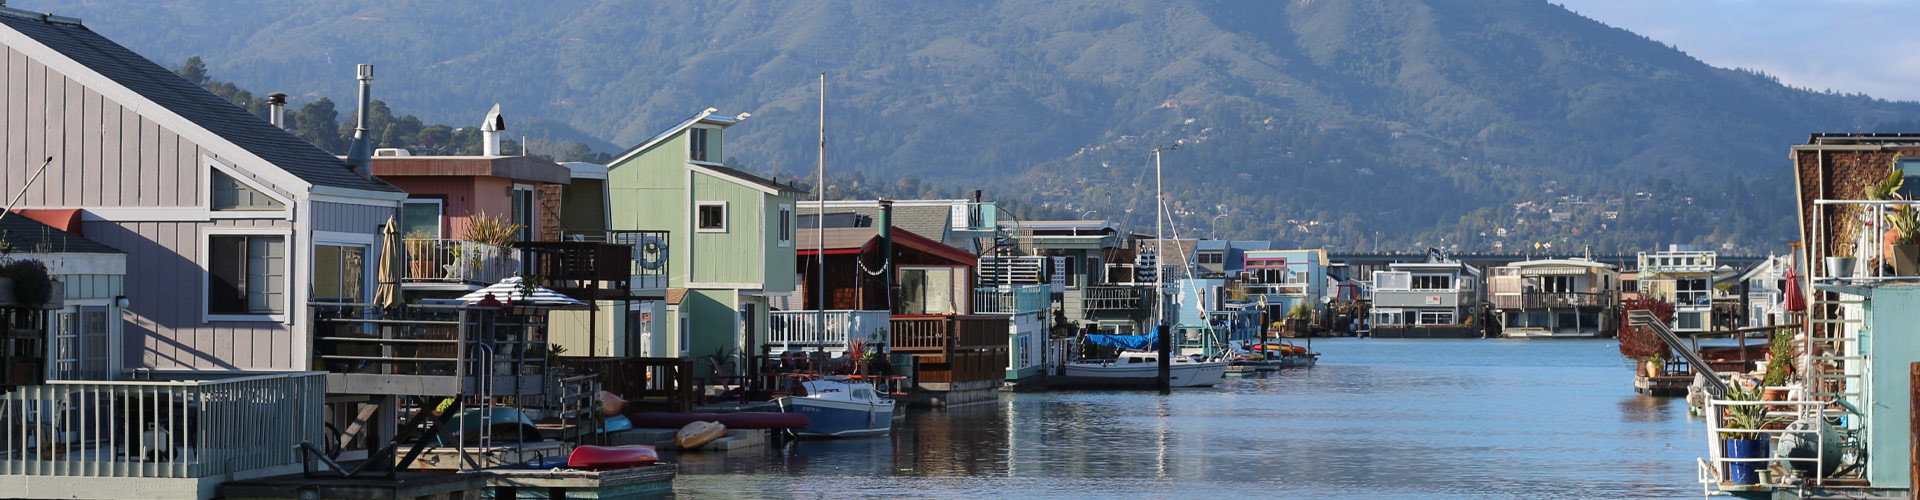 Floating homes on Sausalito harbor